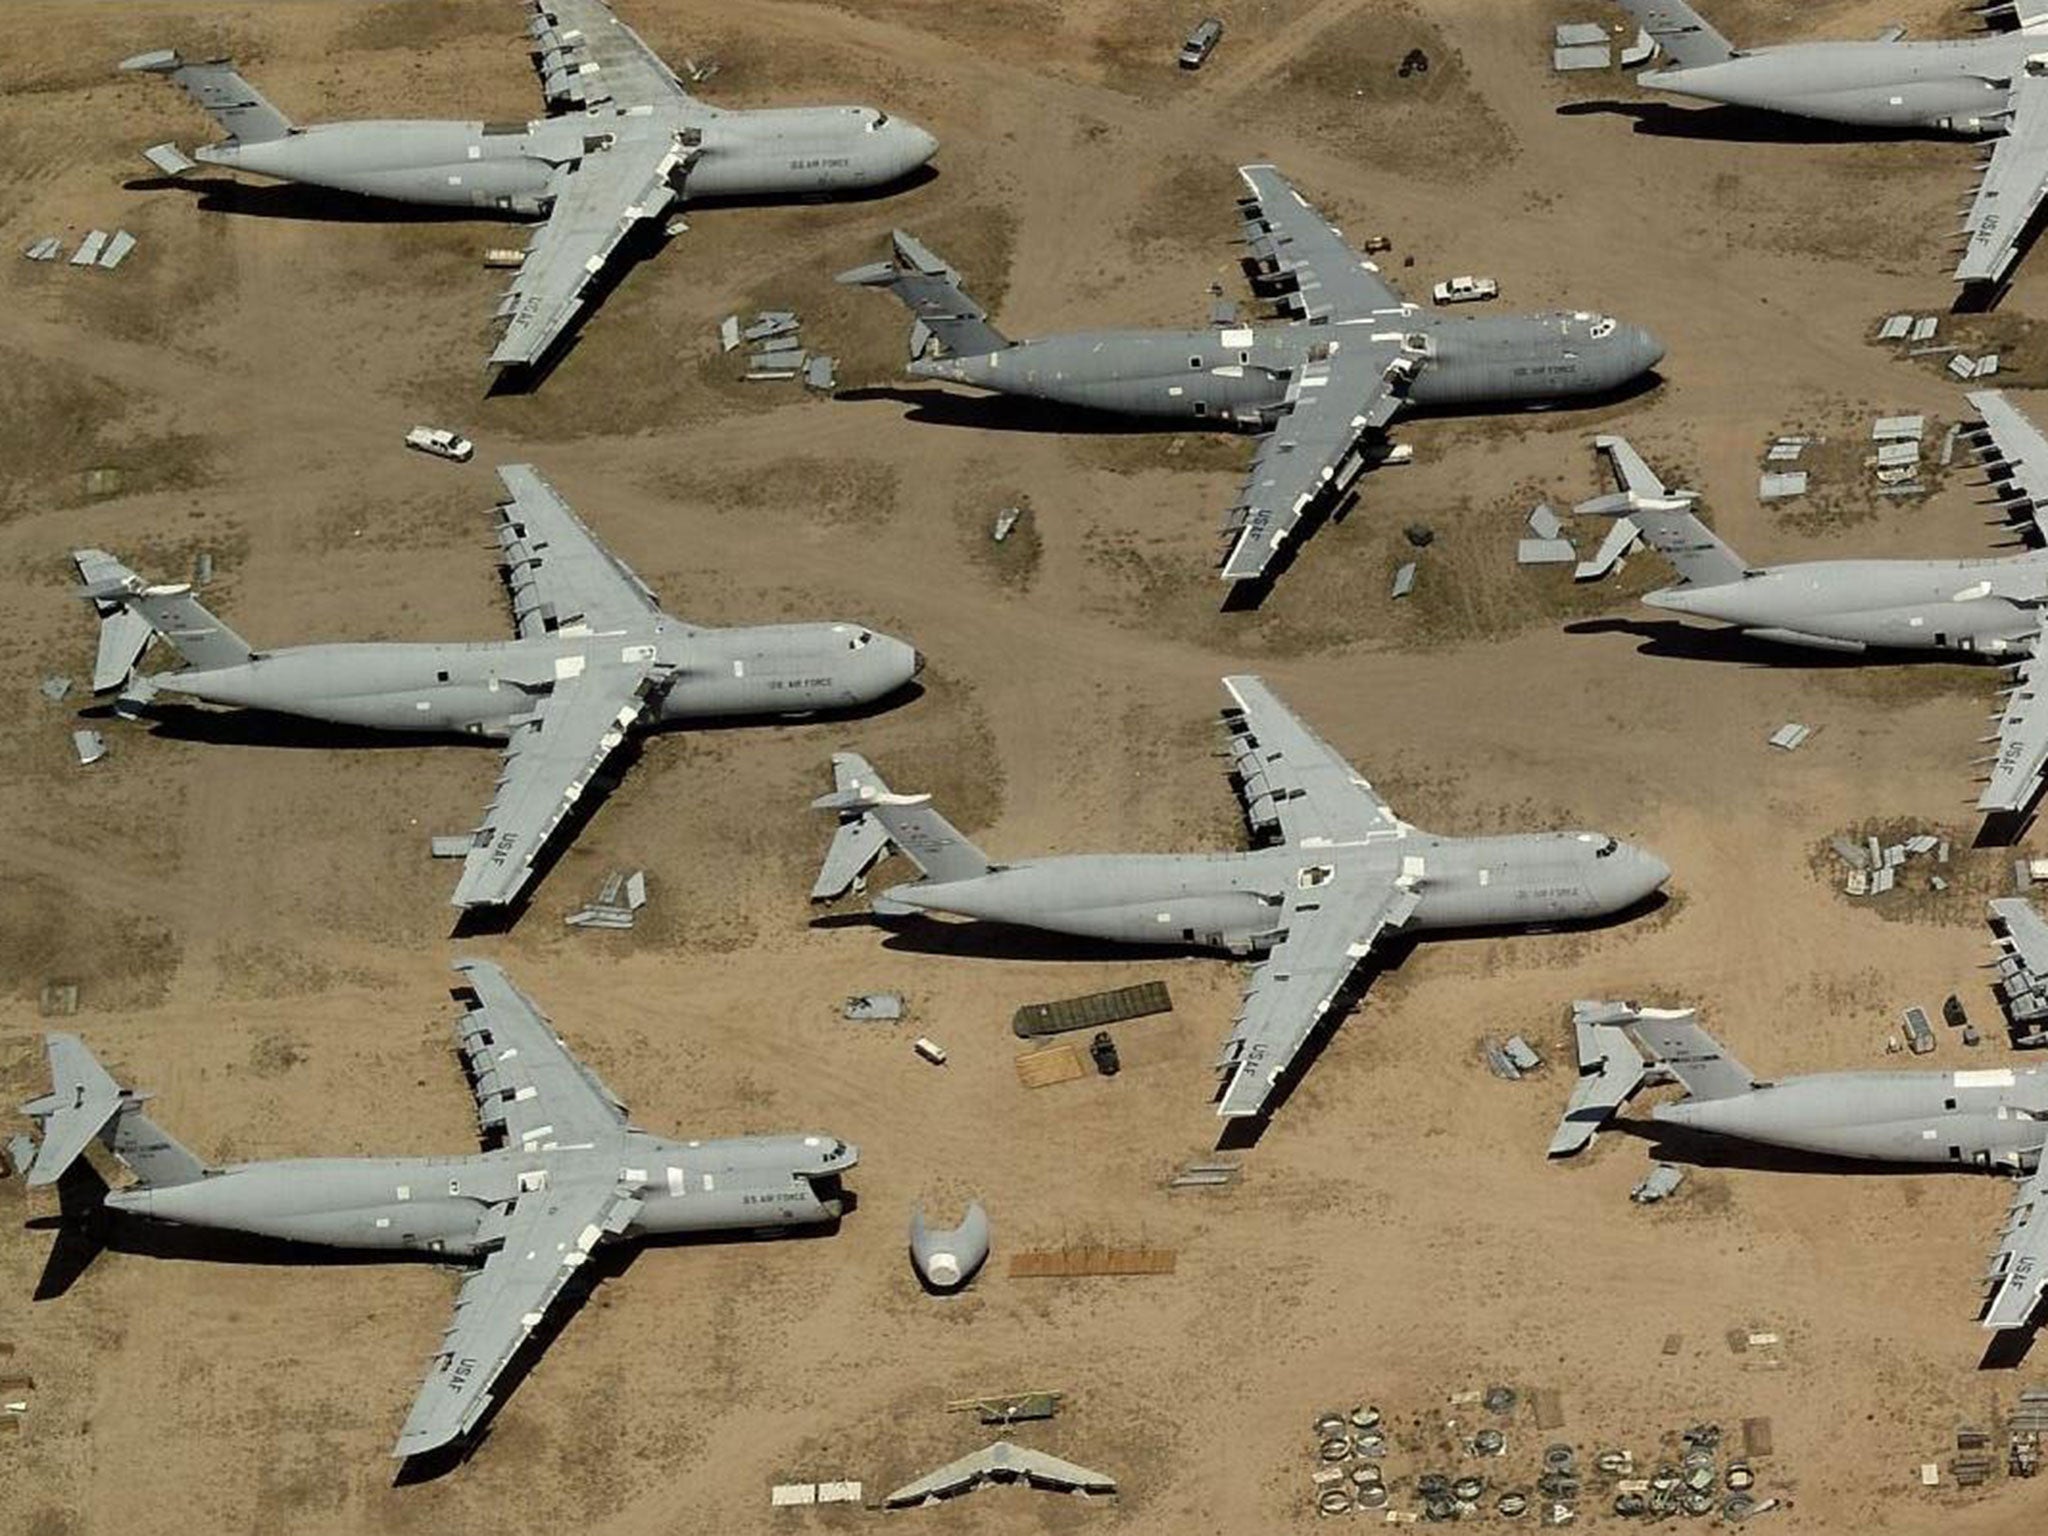 Planes being taken apart for scrap at the Davis-Monthan Air Force Base in Arizona